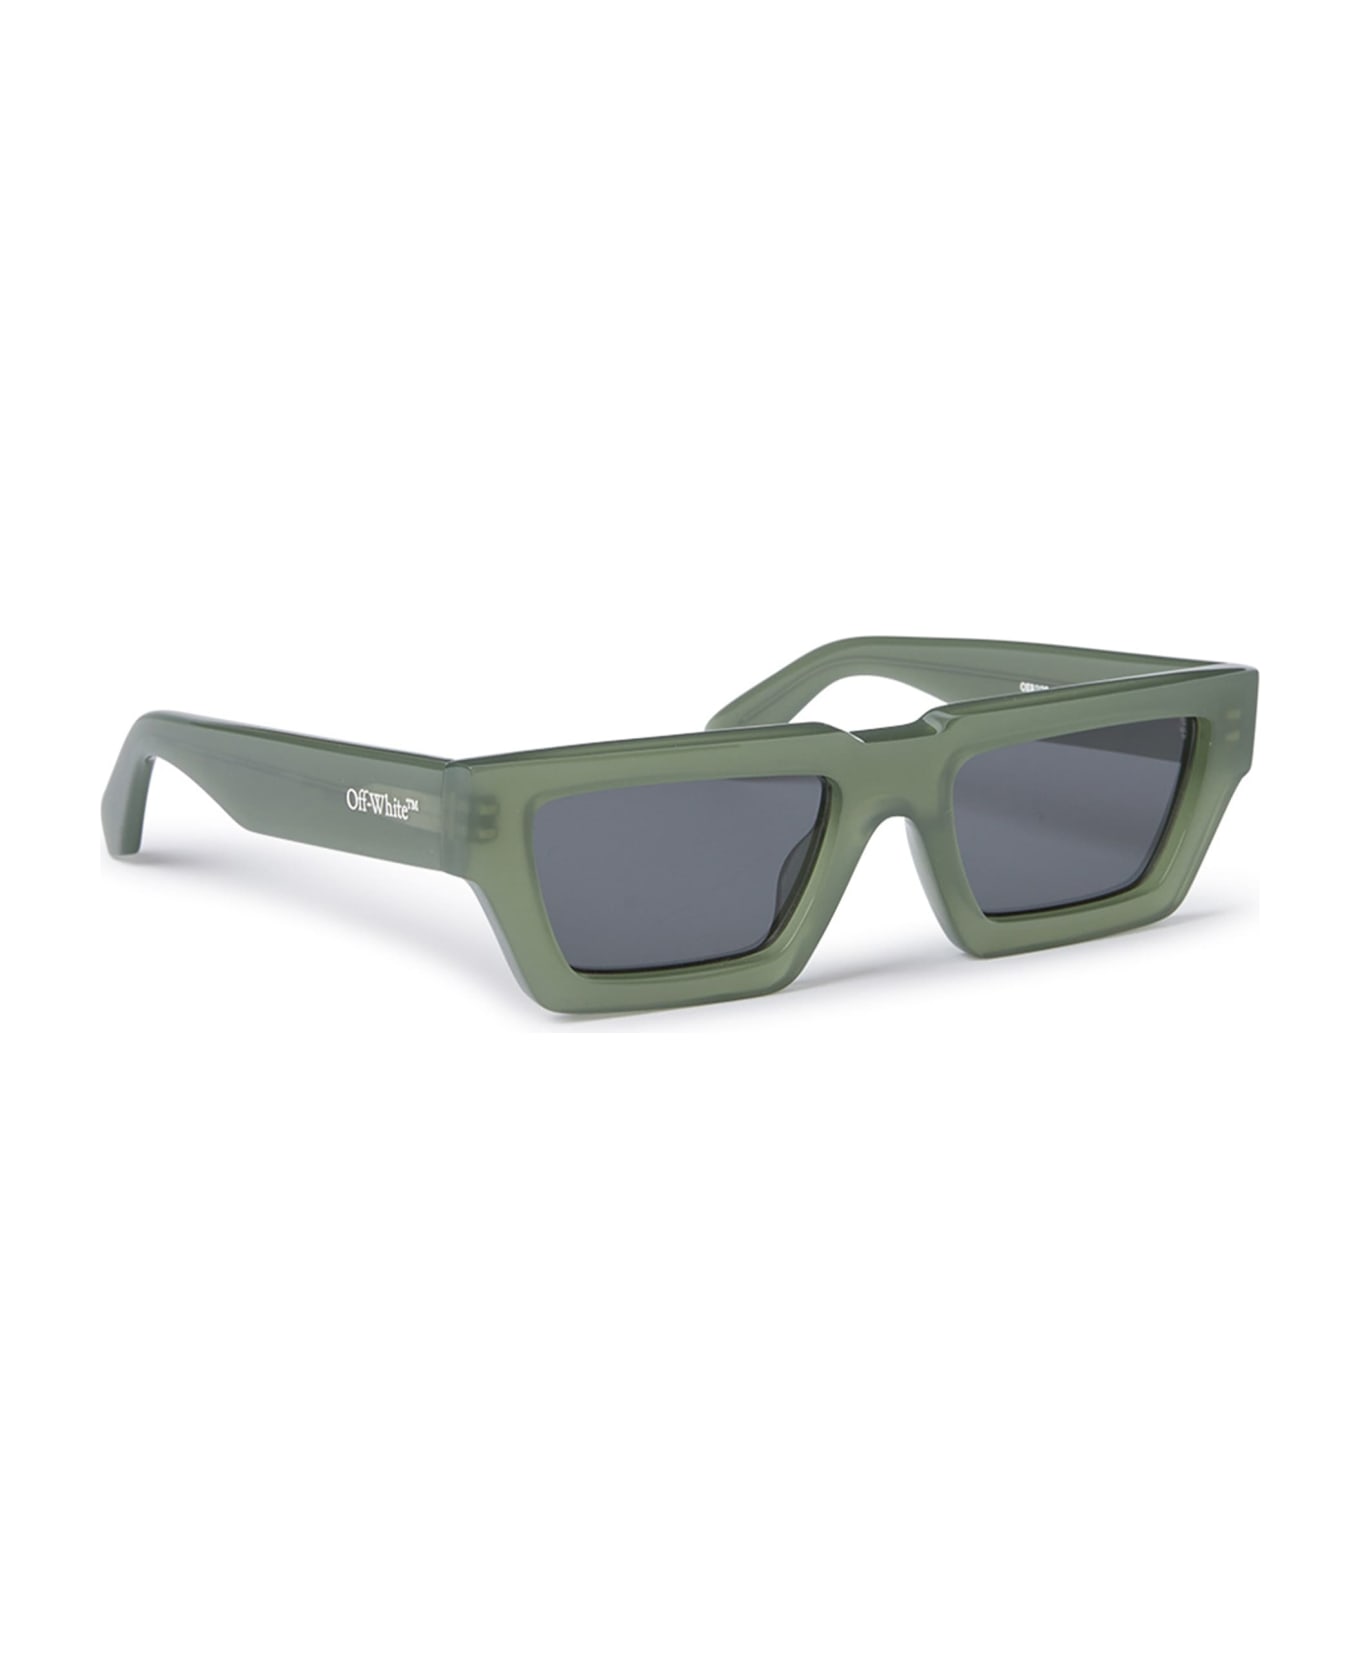 Off-White Manchester - Olive Green / Dark Grey Sunglasses - green